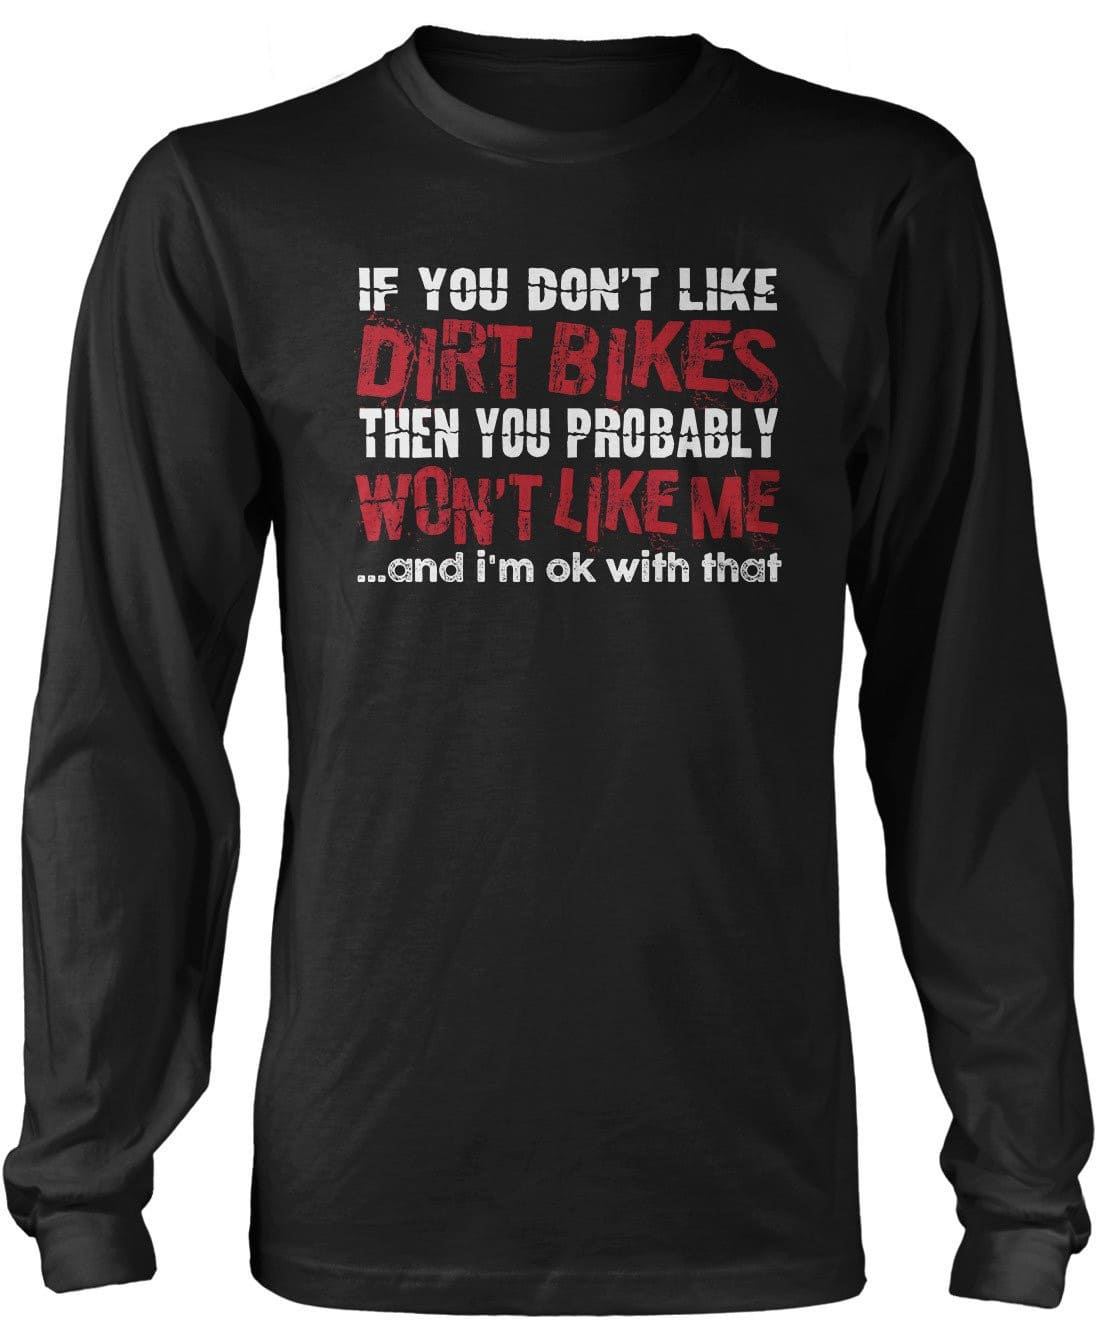 If You Don't Like Dirt Bikes You Won't Like Me T-Shirt